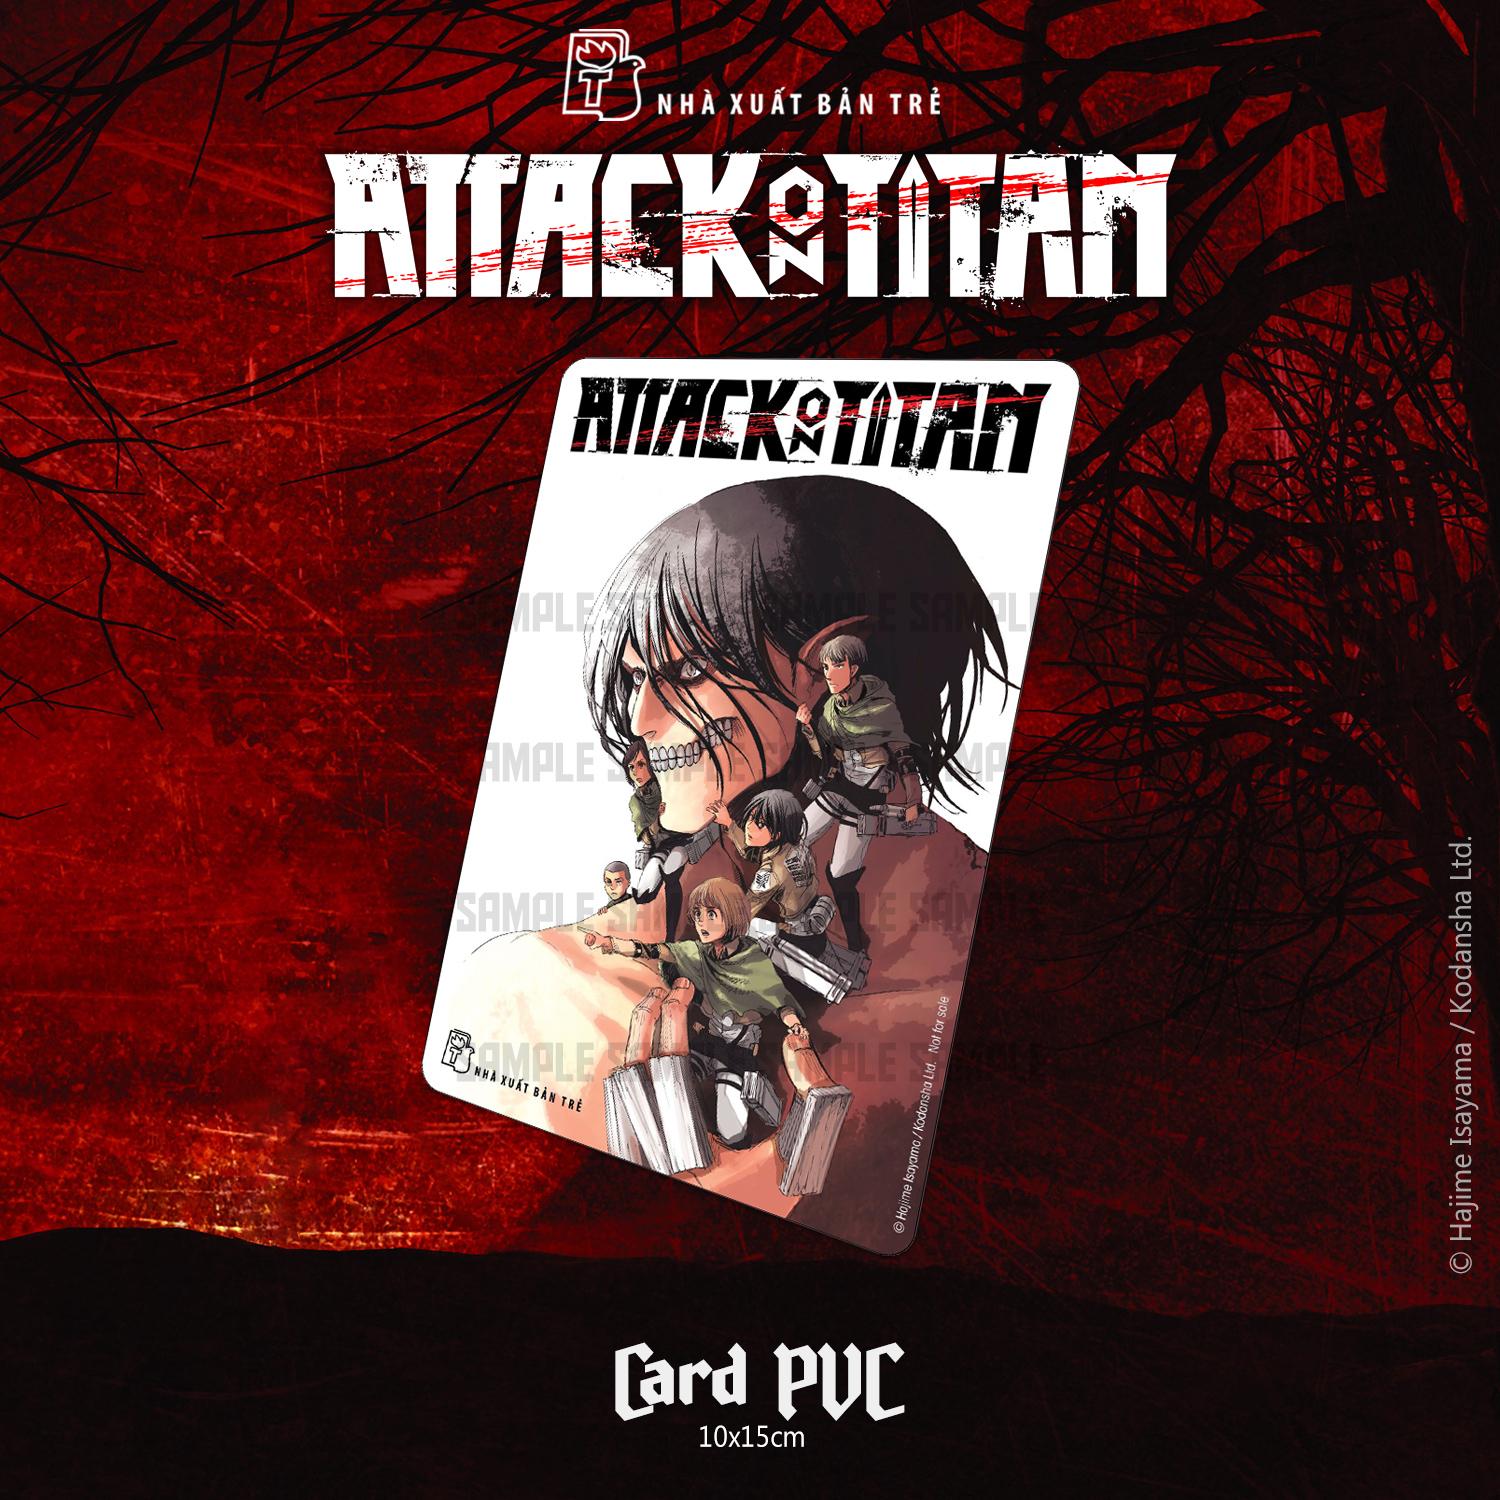 [Pre-order] Bộ Manga - Attack On Titan: Tập 1 - 3 (Bộ 3 Tập) - Tặng Kèm Card PVC + Card Shikishi